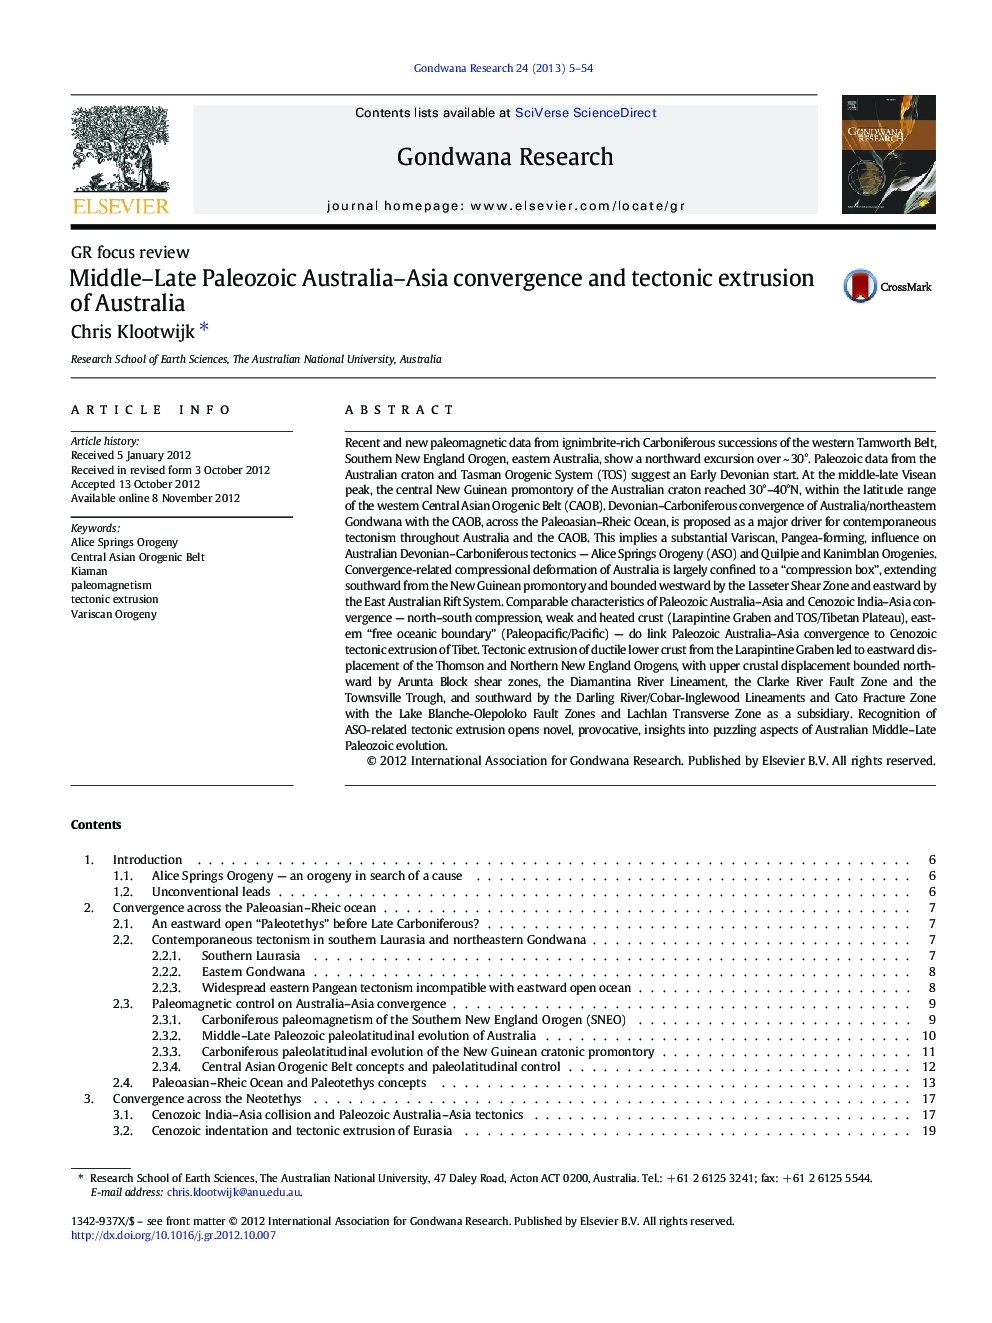 Middle–Late Paleozoic Australia–Asia convergence and tectonic extrusion of Australia